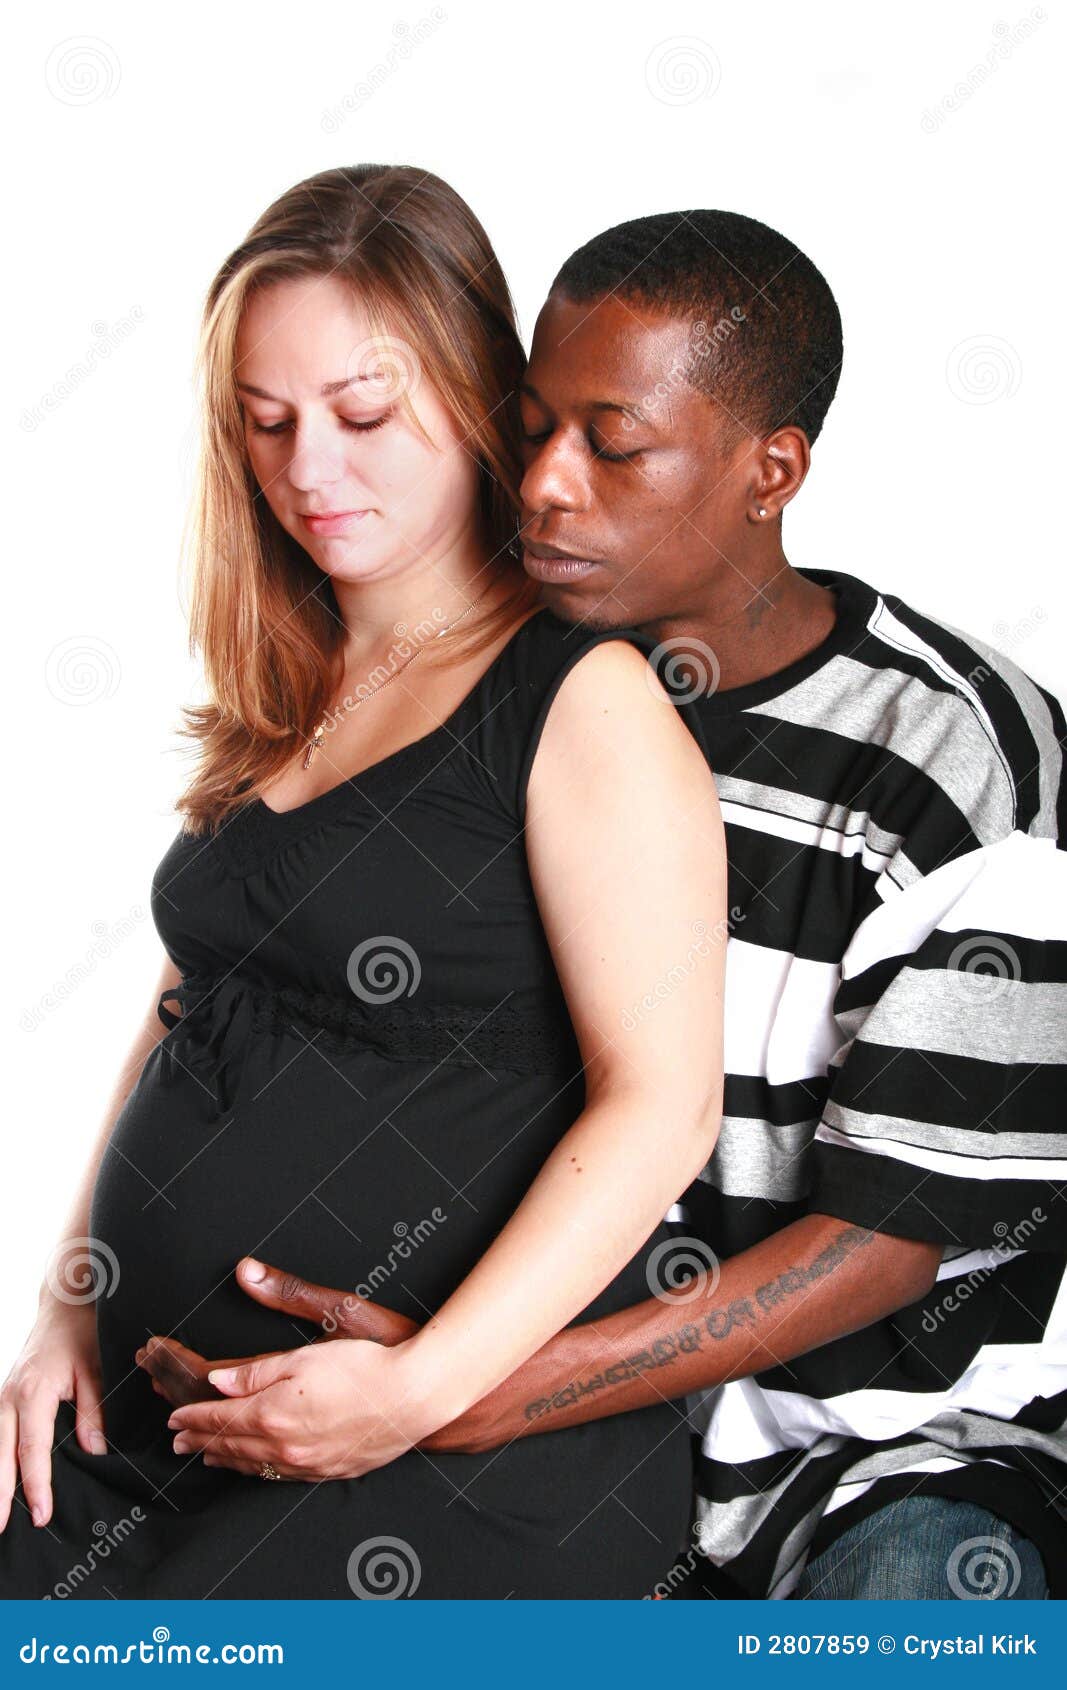 White couples interracial pregnant - Porn pictures